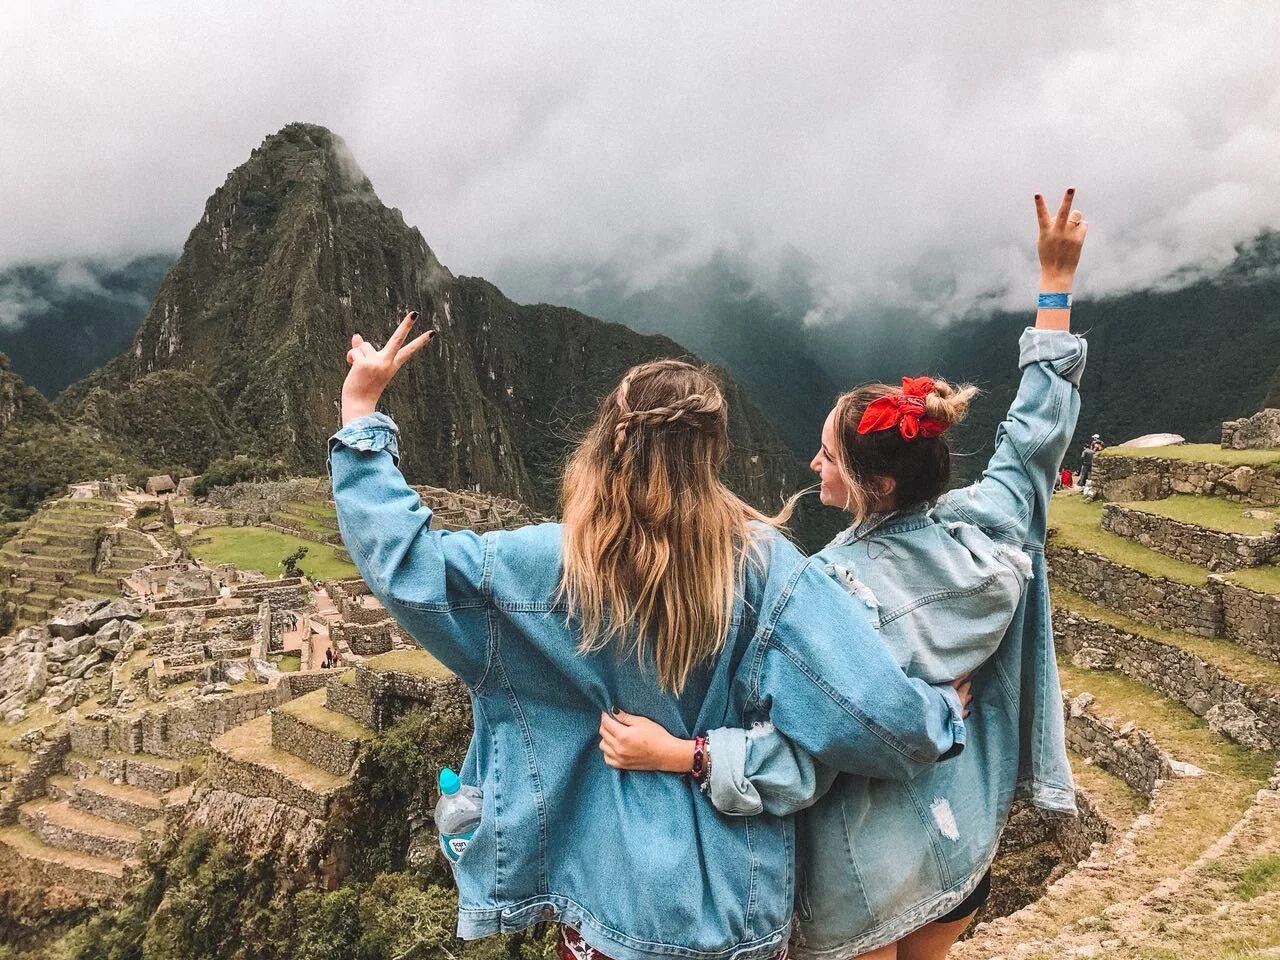 Друзья в путешествии дружбы. Путешествие друзей. Machu Picchu trip. Friend Travel picture.